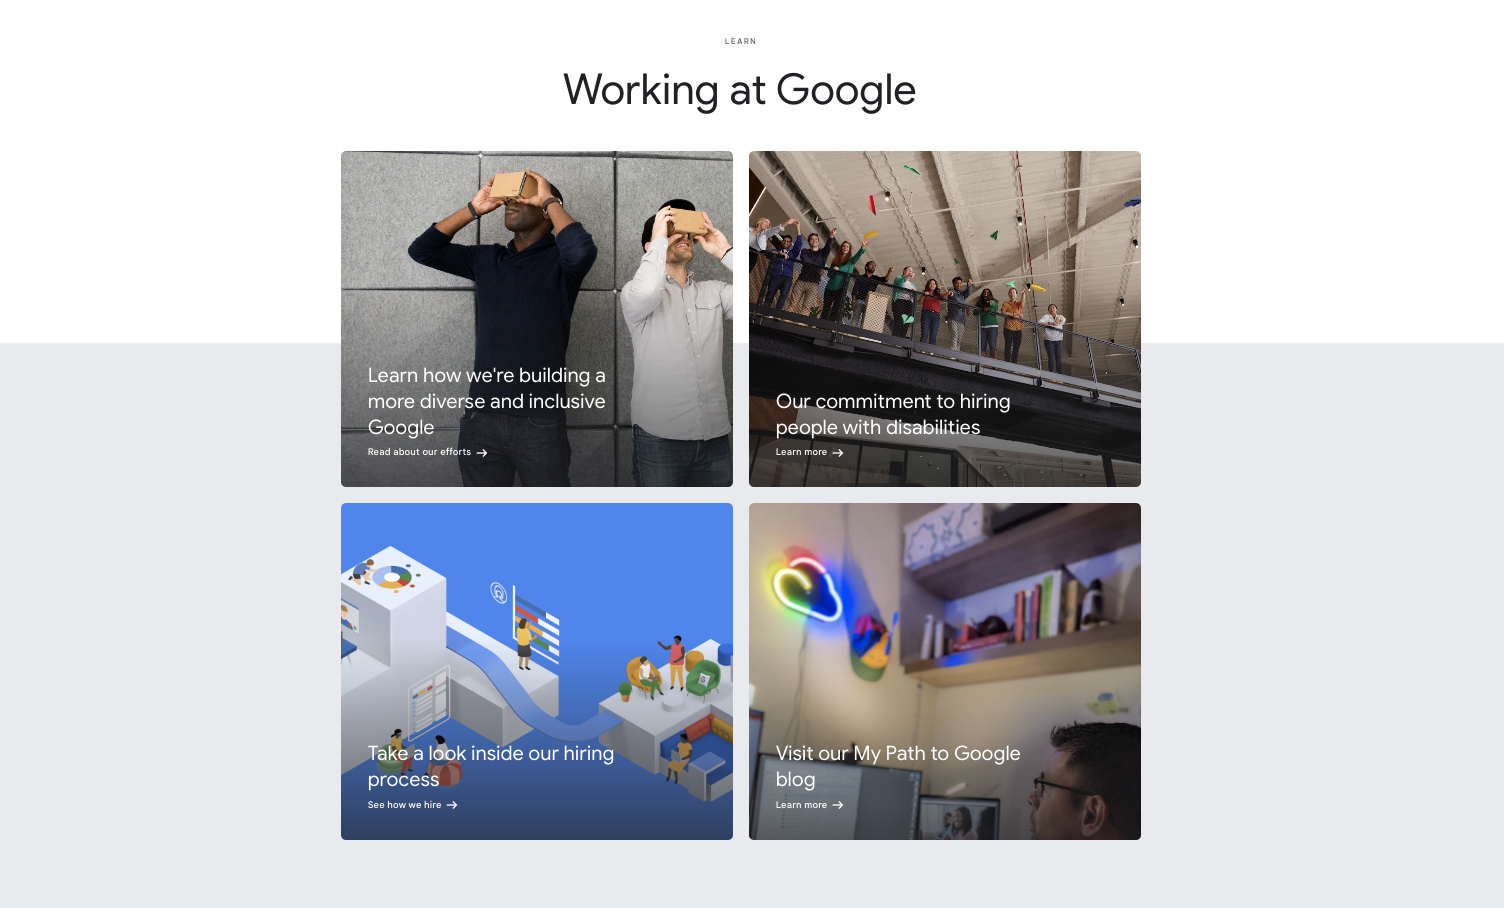 Google's career website